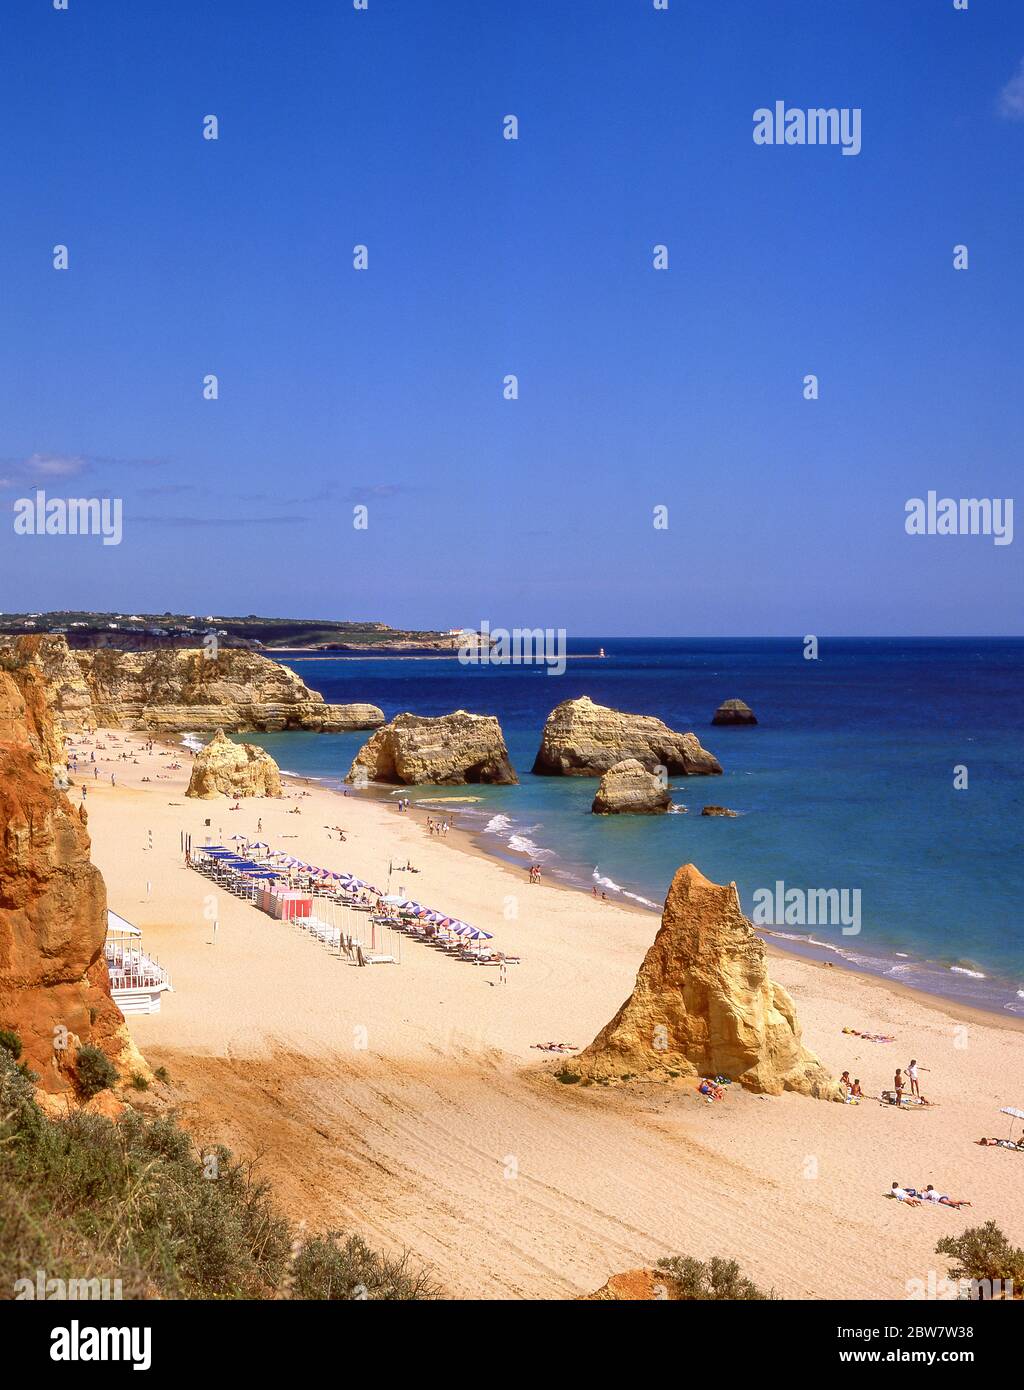 Beach view, Praia da Rocha, Portimão, Algarve Region, Portugal Stock Photo